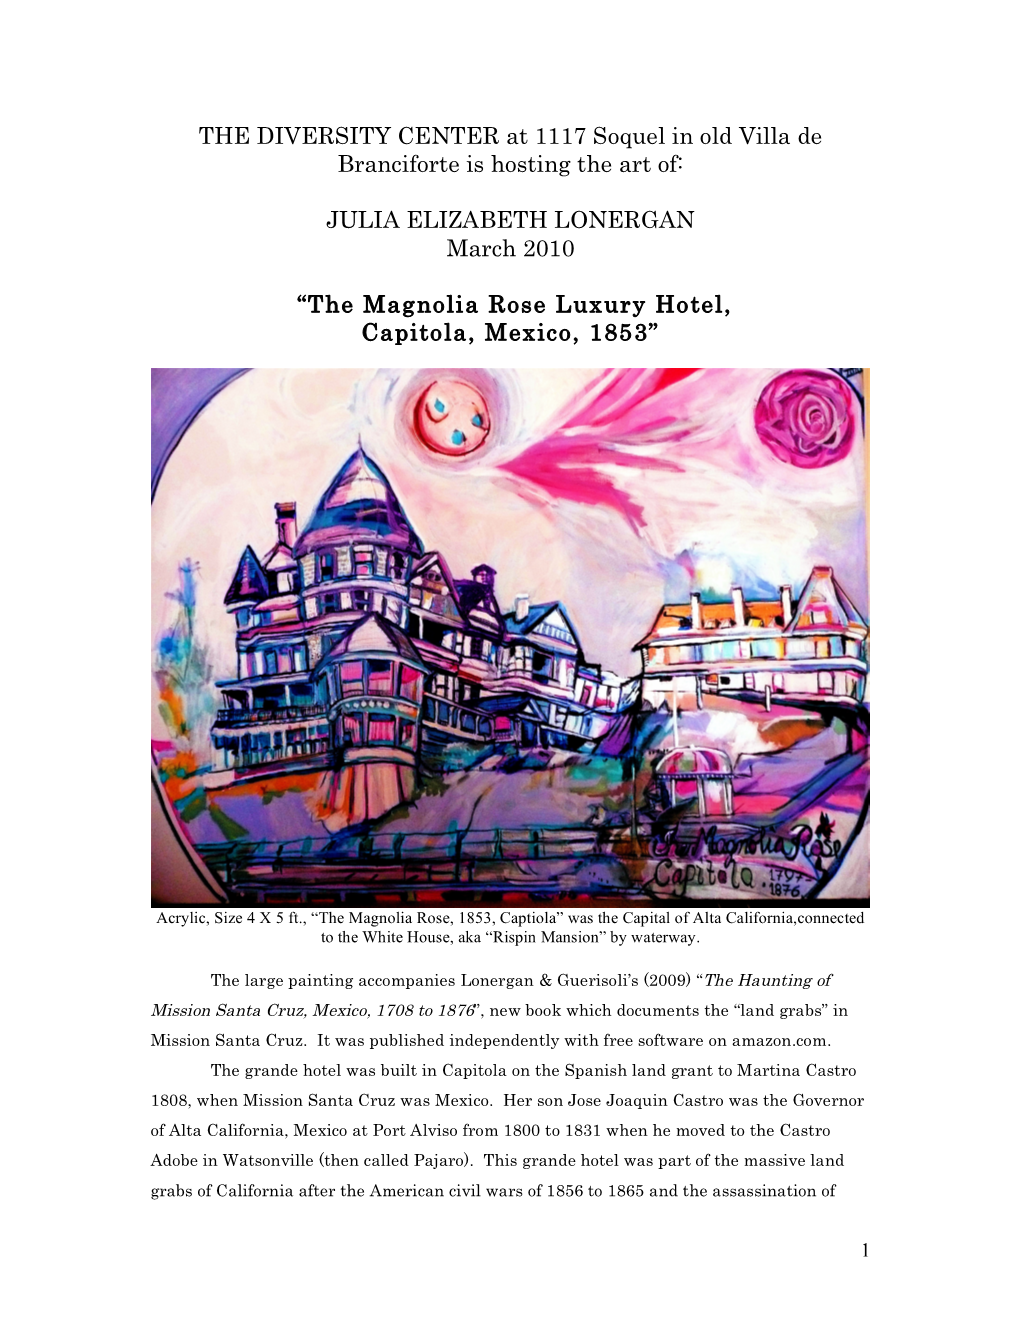 THE DIVERSITY CENTER at 1117 Soquel in Old Villa De Branciforte Is Hosting the Art Of: JULIA ELIZABETH LONERGAN March 2010 “T